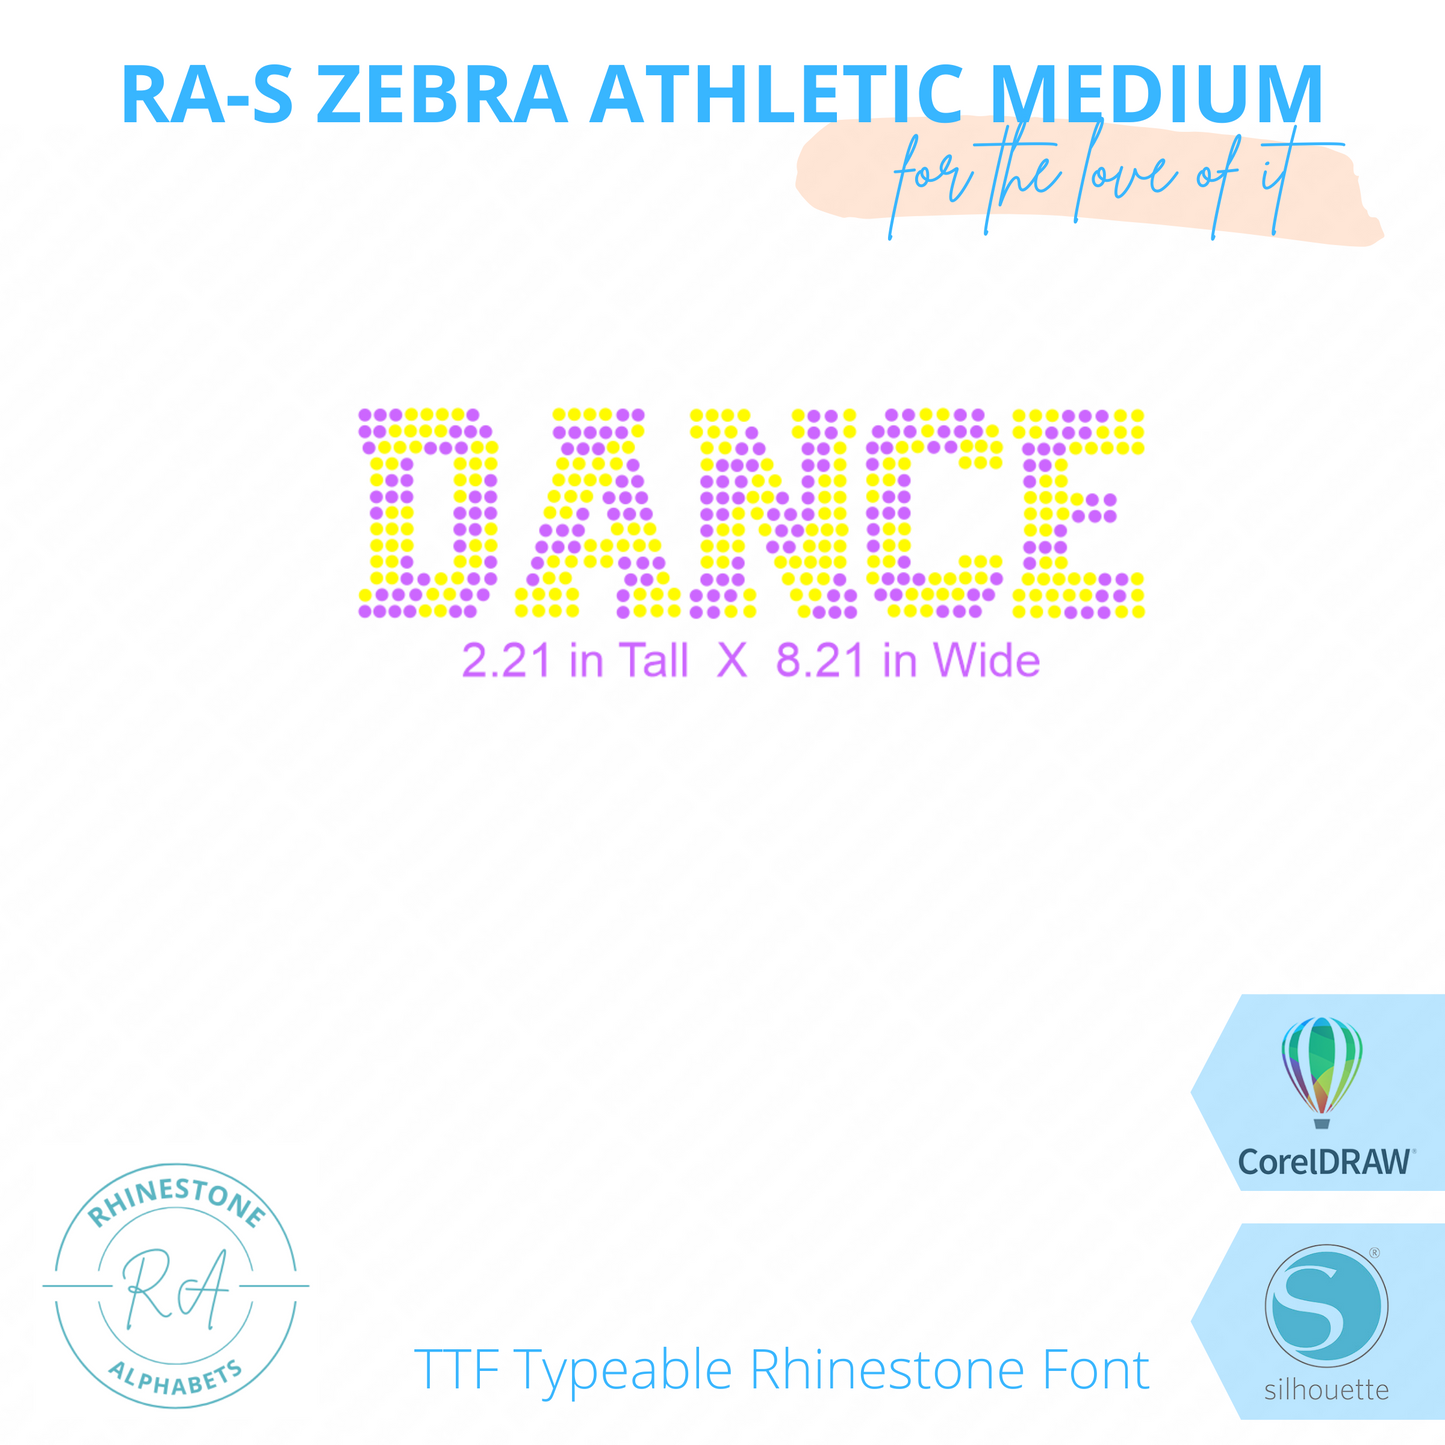 RA-S Zebra Athletic Medium - RhinestoneAlphabets